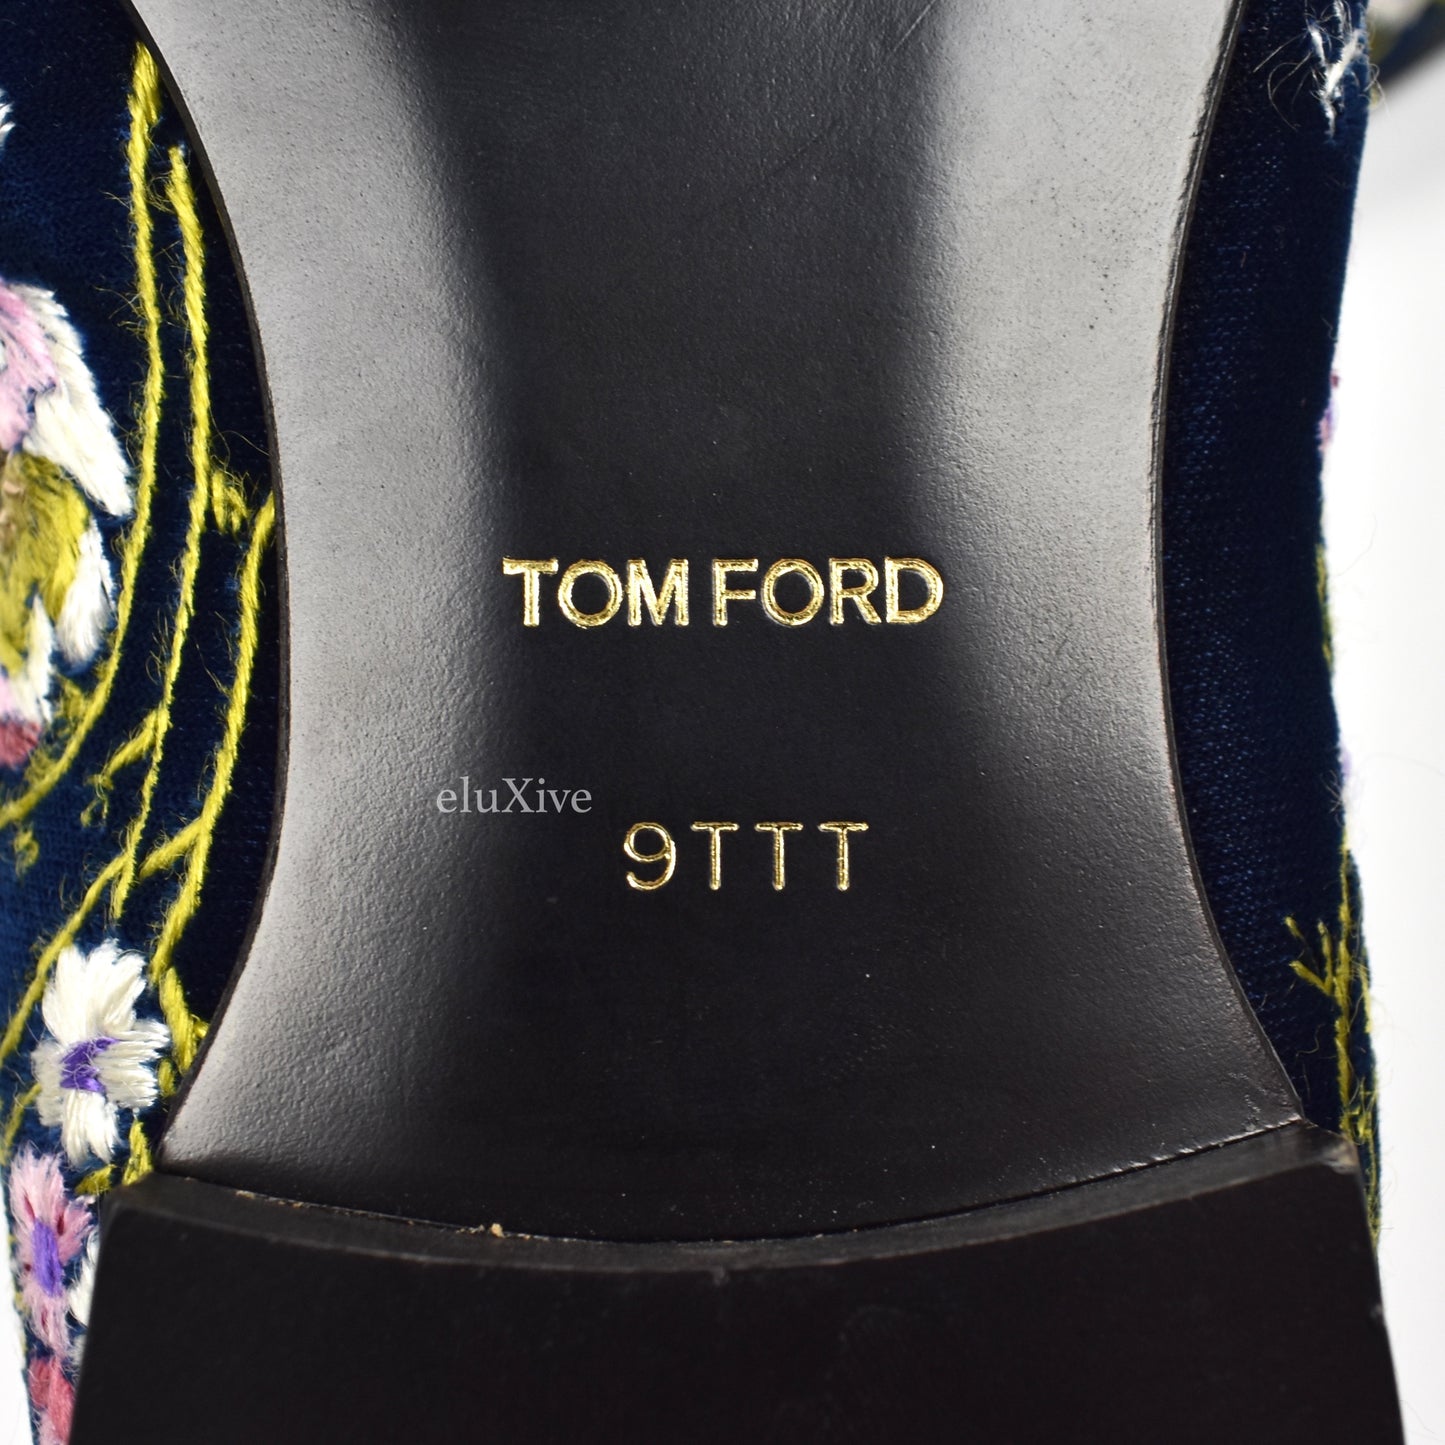 Tom Ford - Hand Embroidered Floral Velvet Loafers